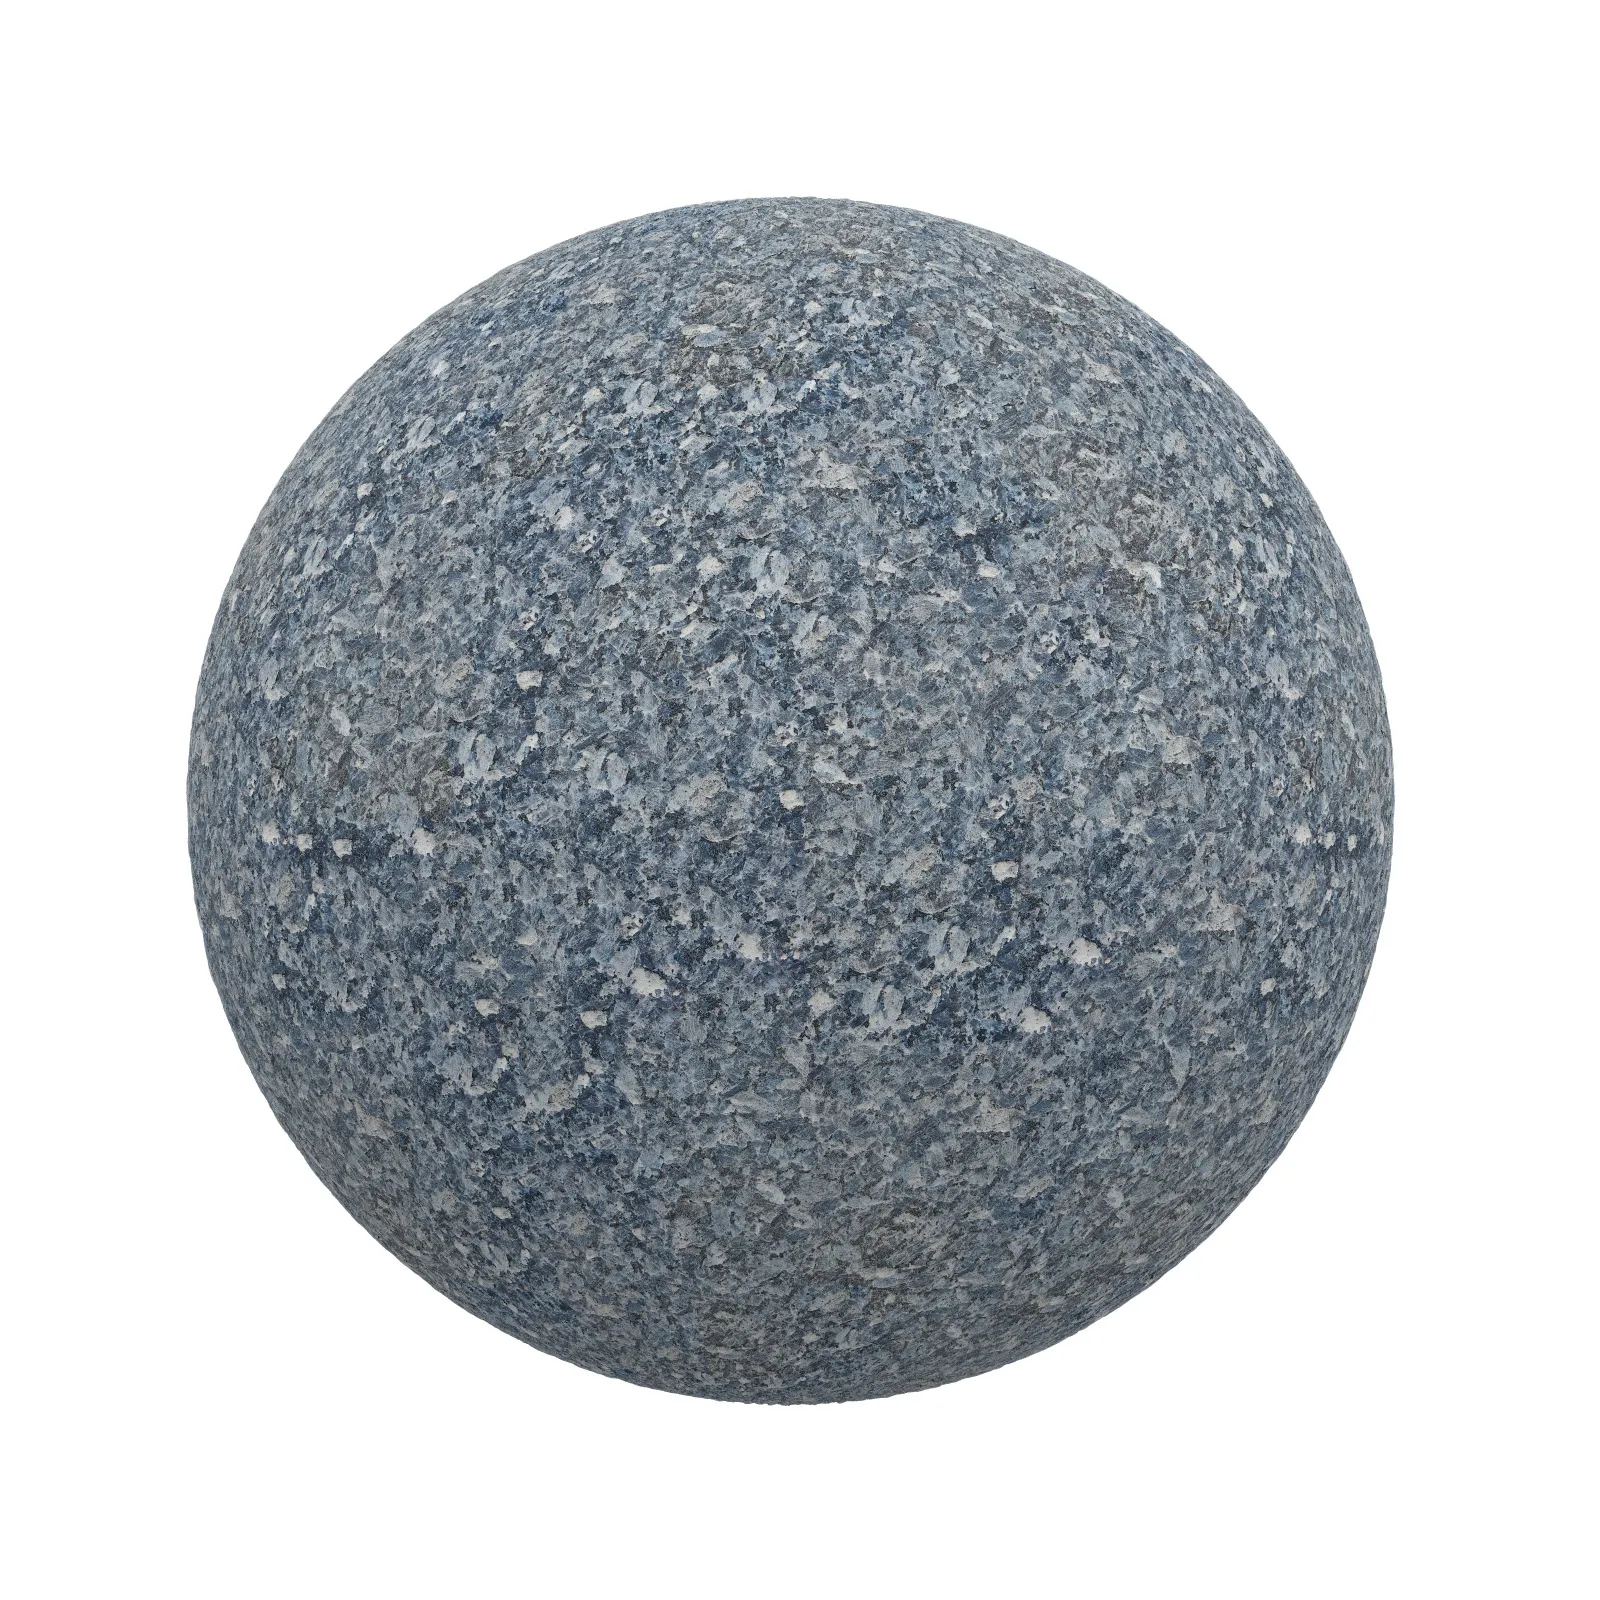 TEXTURES – STONES – CGAxis PBR Colection Vol 1 Stones – blue granite